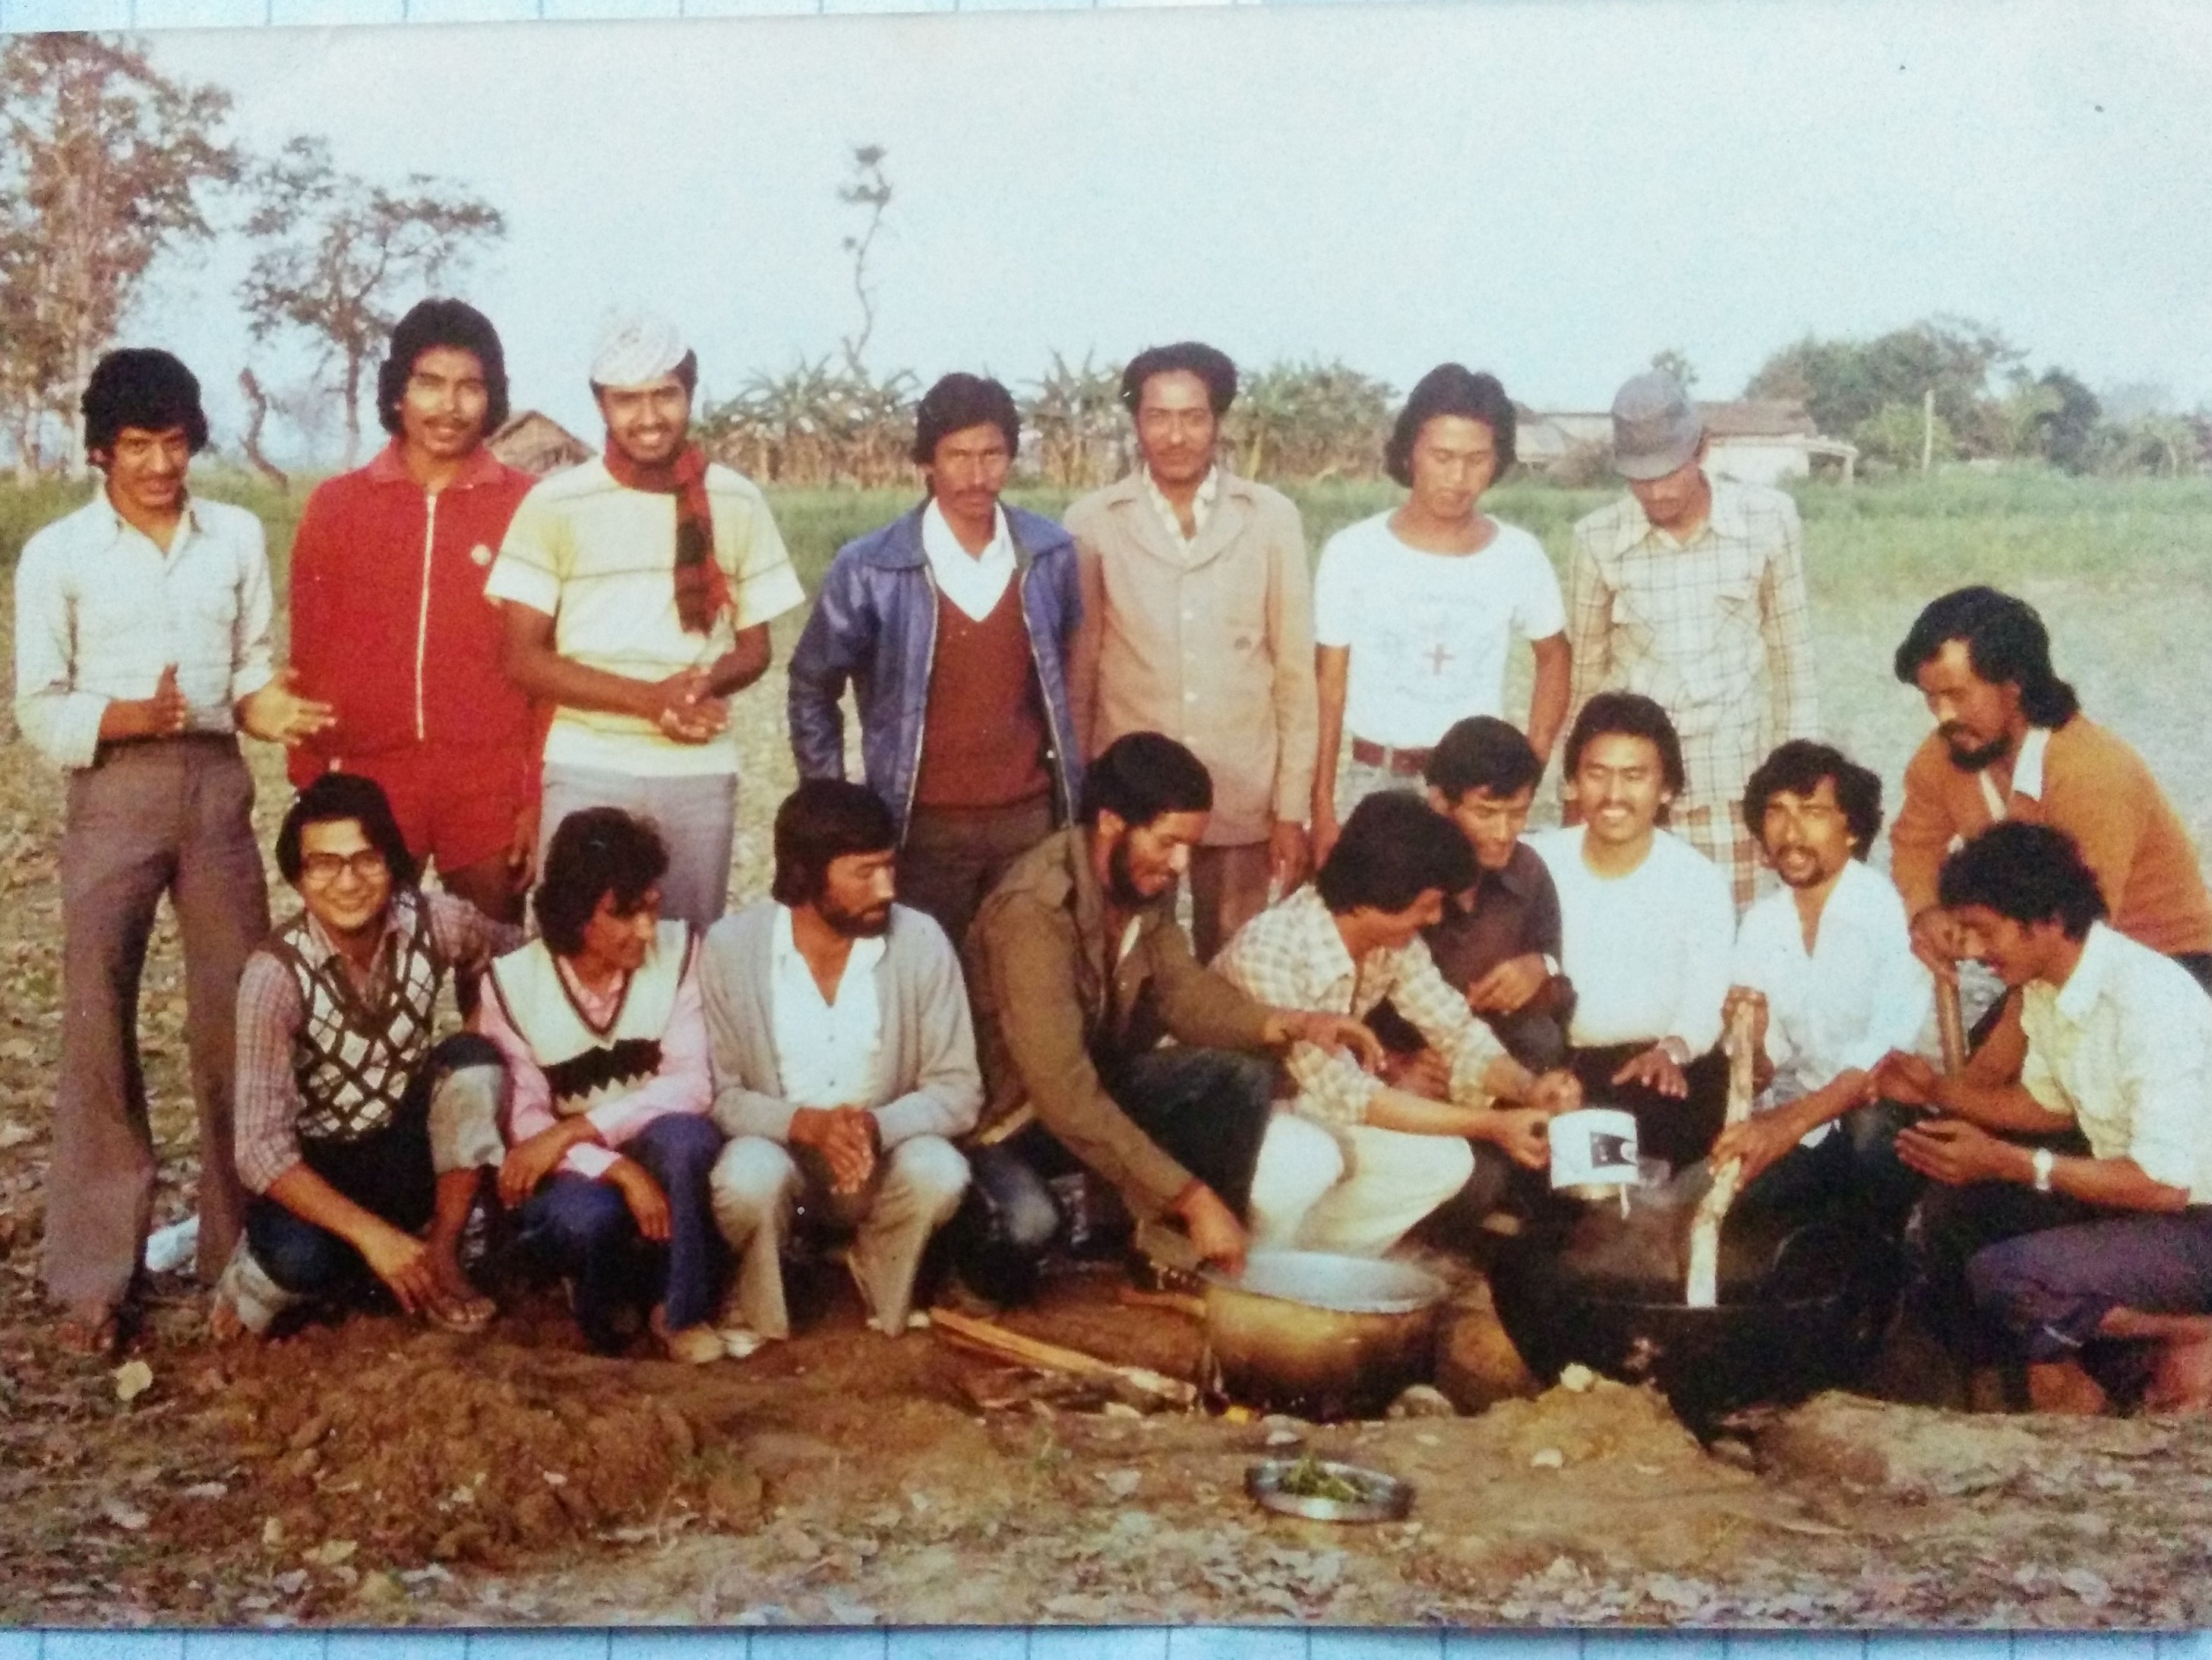 First batch of ophthalmic assistants in Nepal in 1981. NEPAL (c)BIRATNAGAR EYE HOSPITAL